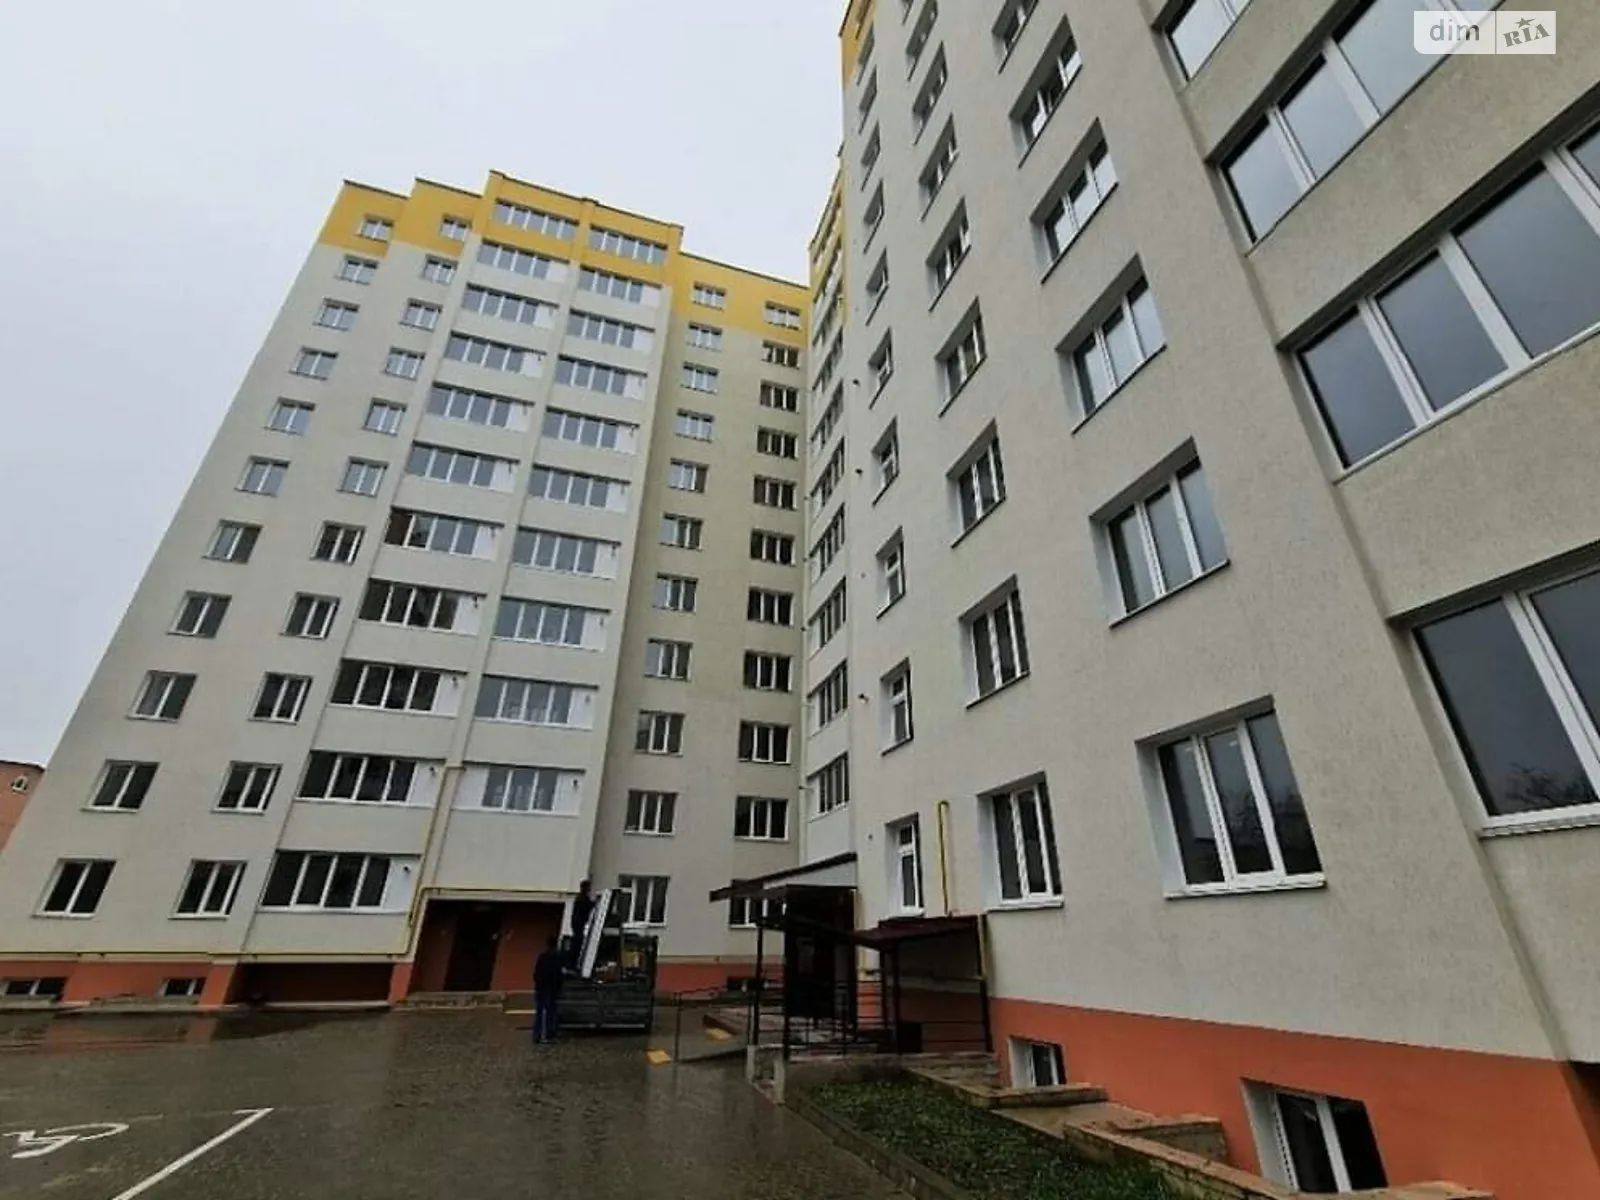 Продається 4-кімнатна квартира 120 кв. м у Хмельницькому, просп. Миру, 63В - фото 1